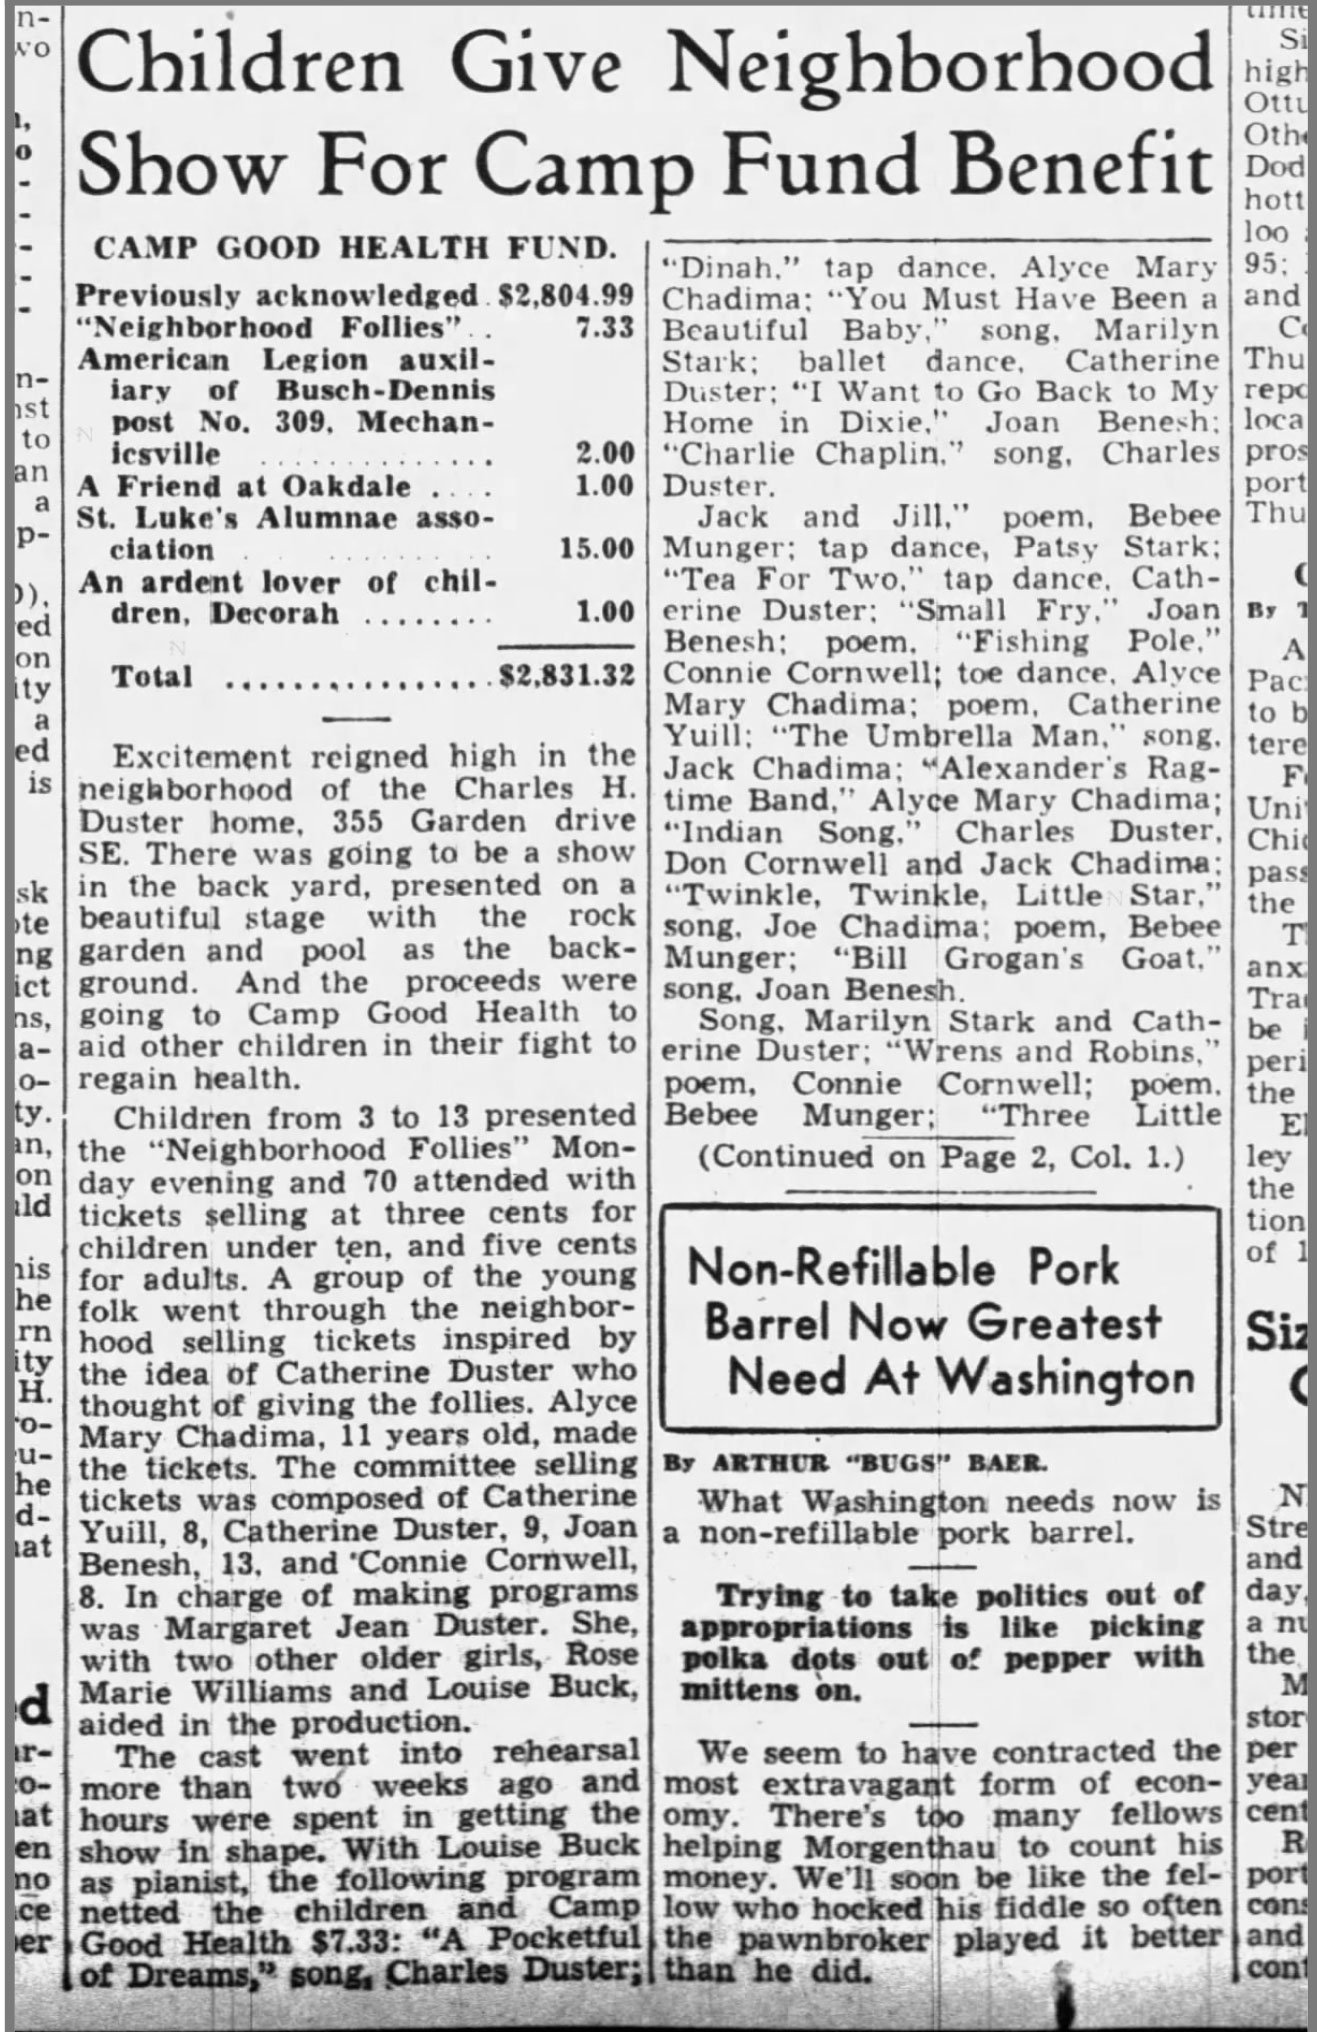 A 1939 front page article in the Cedar Rapids Gazette